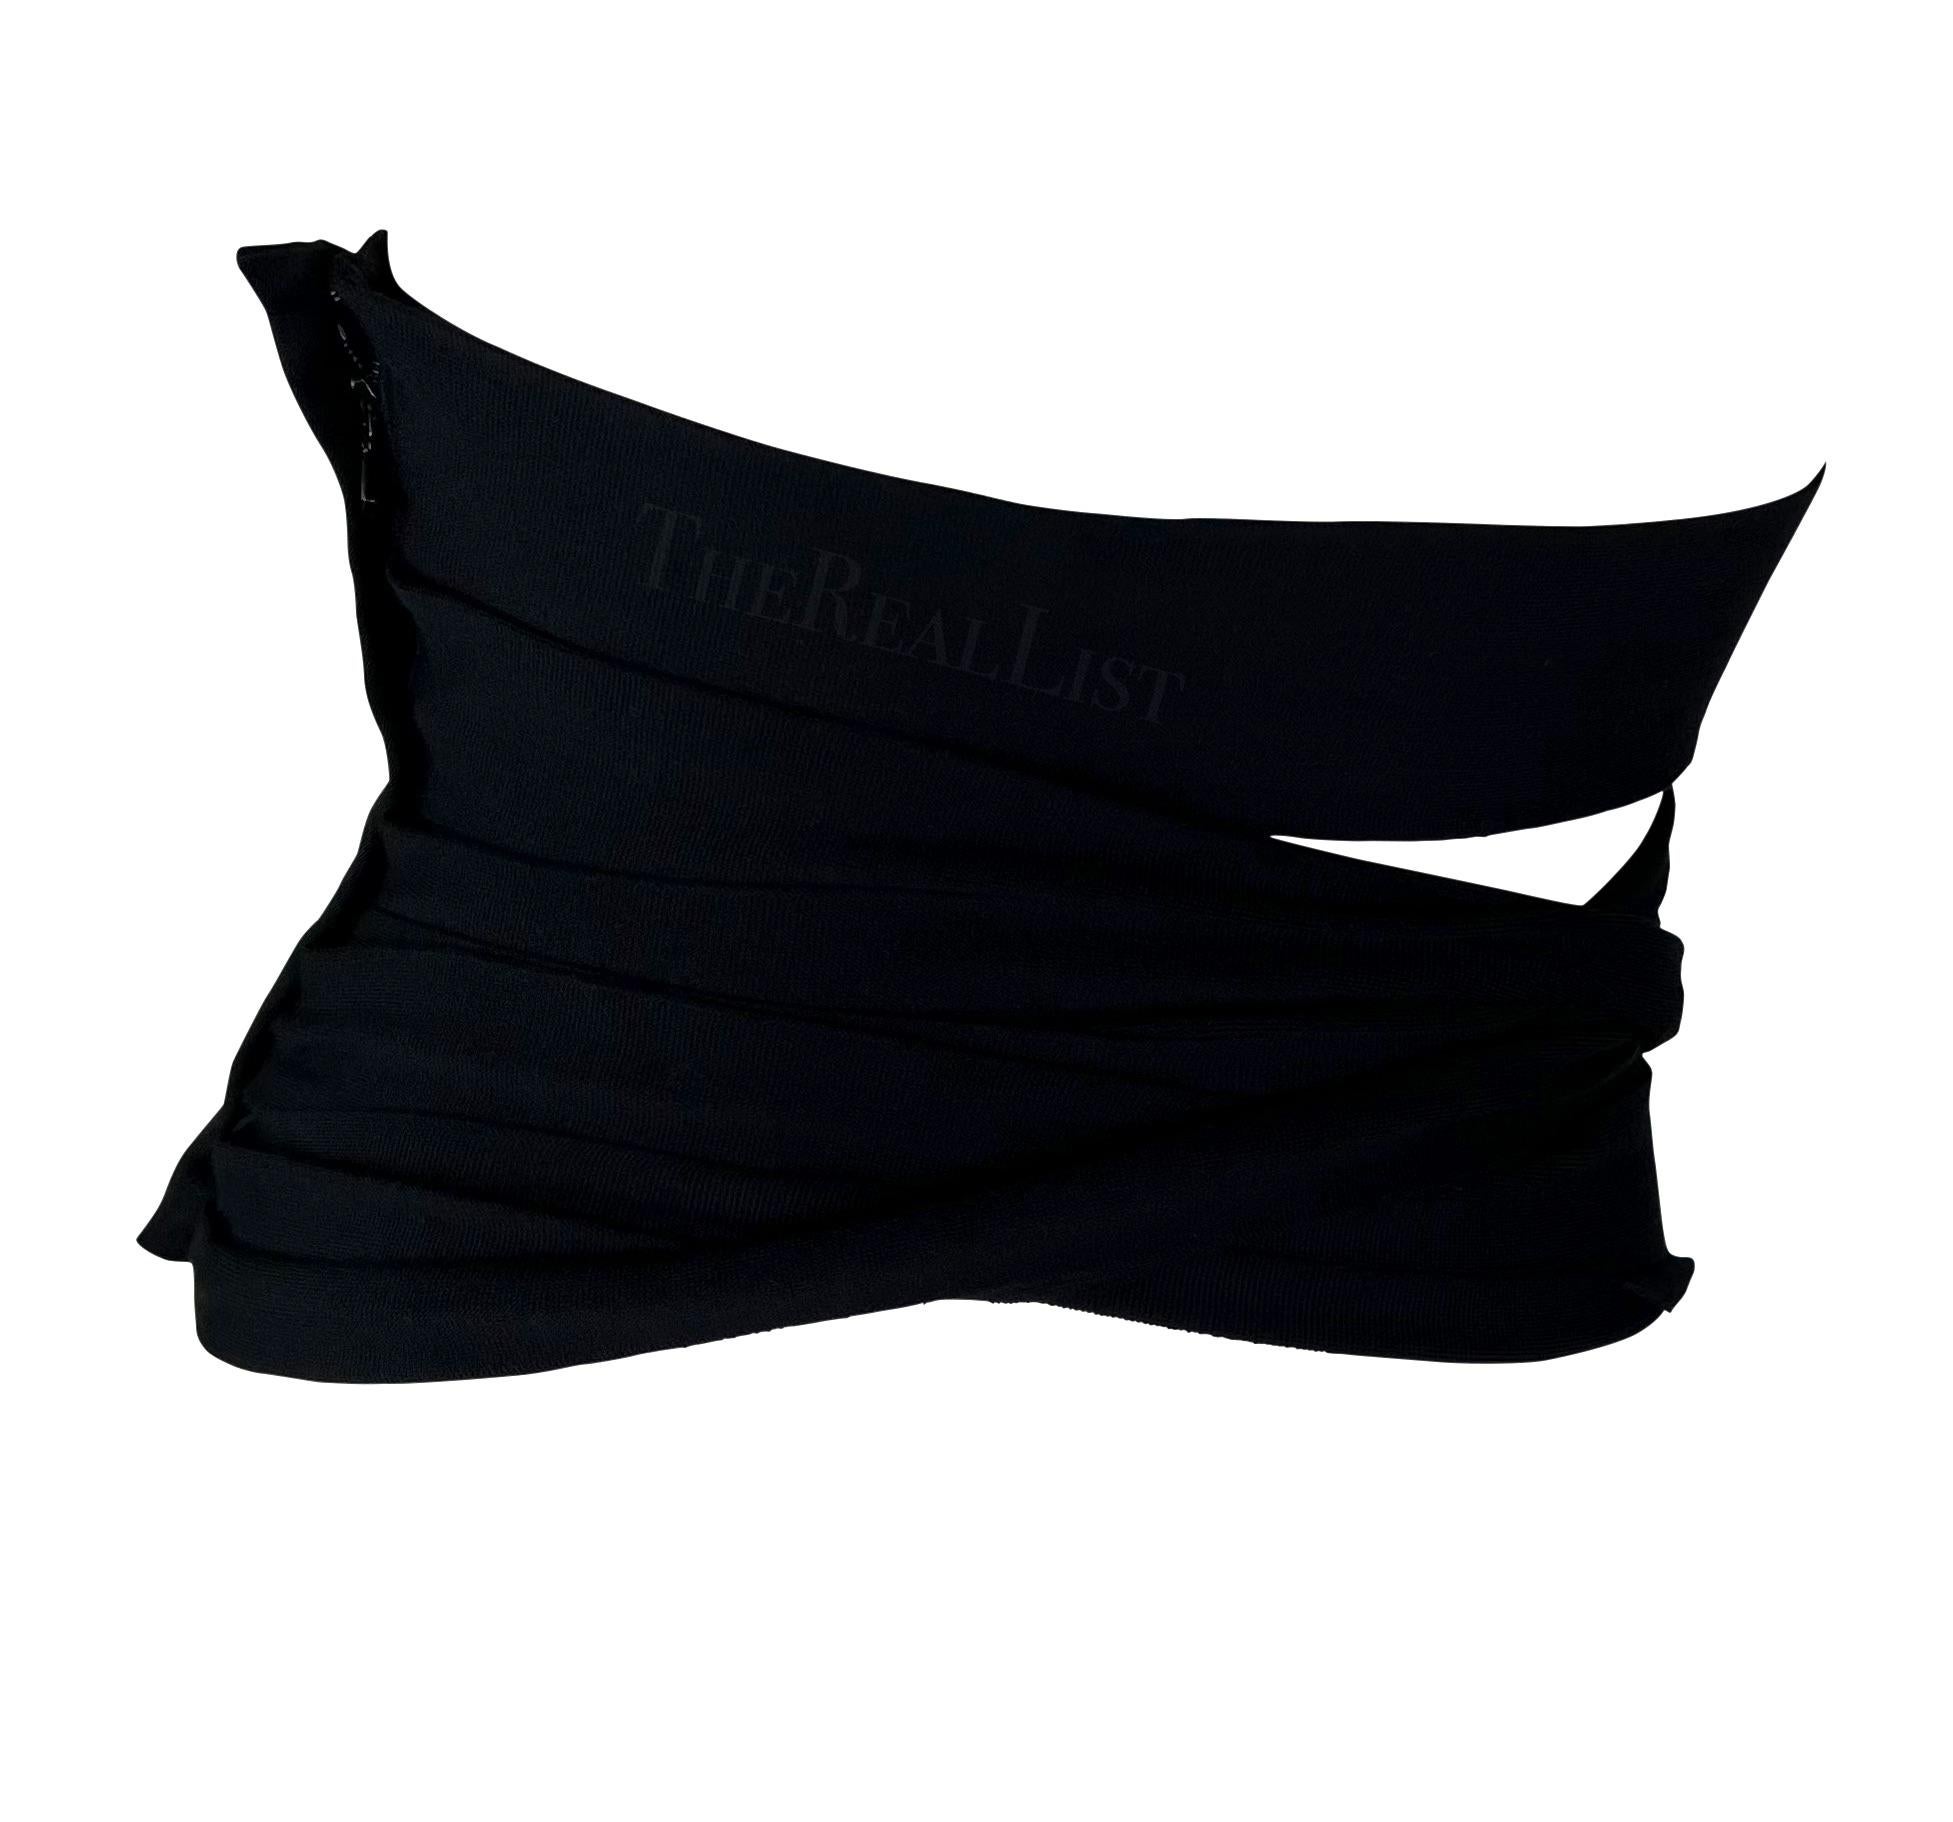 S/S 2001 Yves Saint Laurent by Tom Ford Black Bandage Corset Waist Belt Top For Sale 5